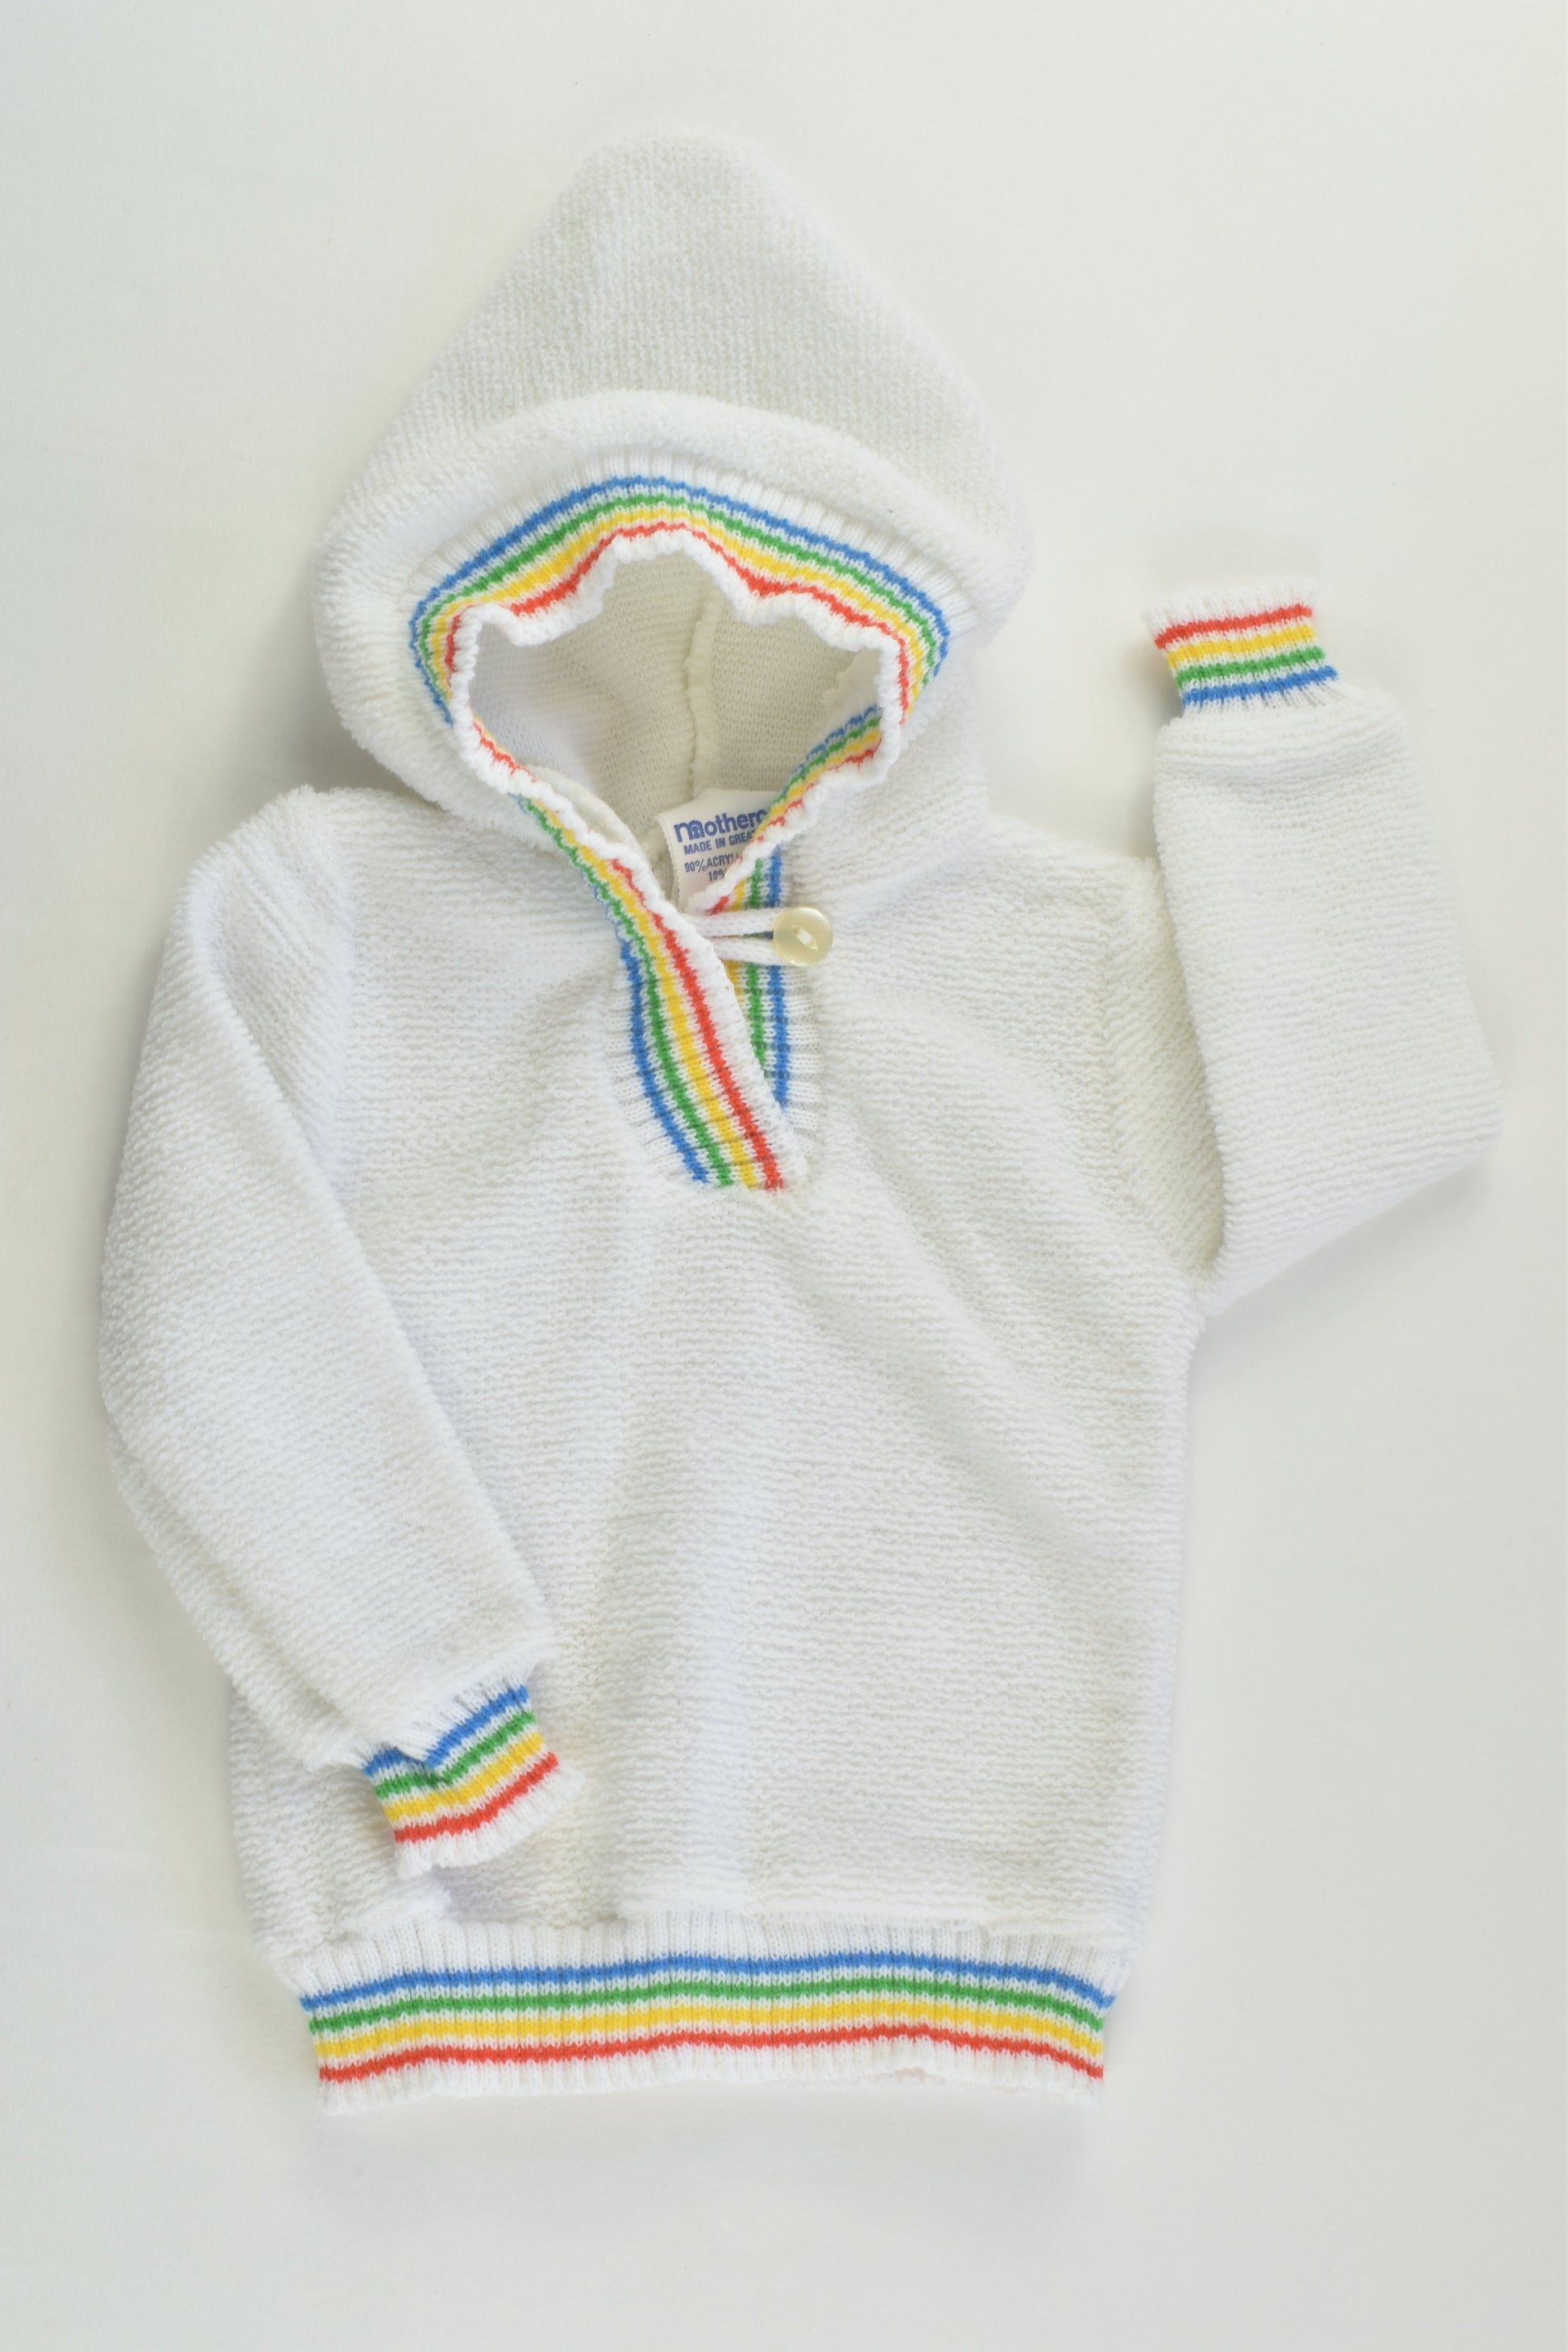 NEW Mothercare Size 00 (70 cm) Vintage Rainbow Stripes Jumper